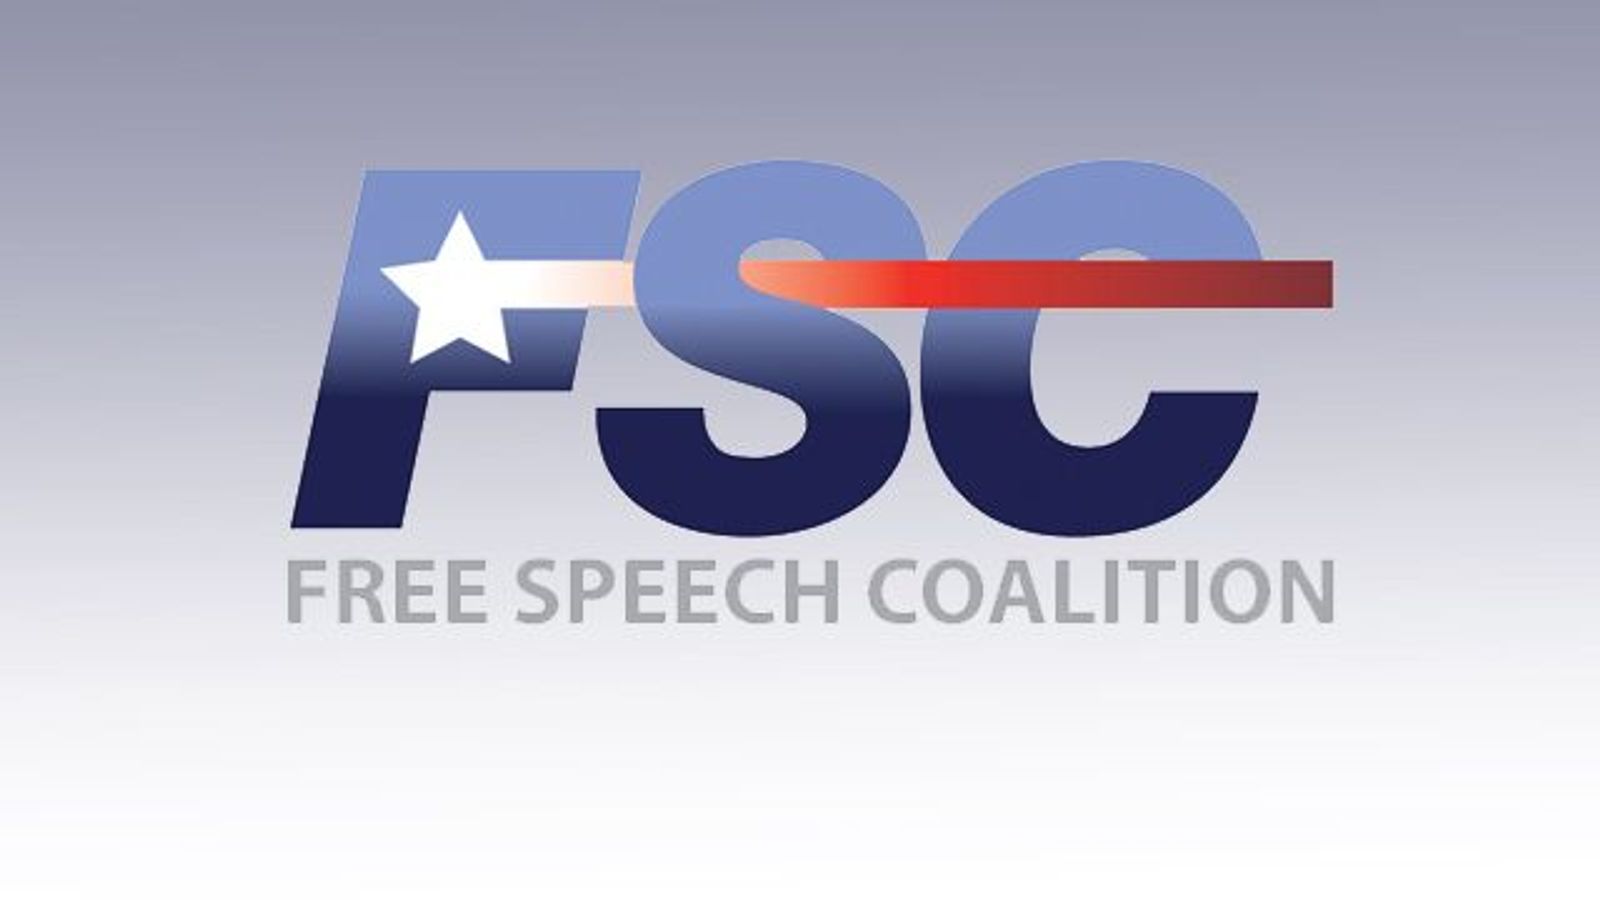 FSC Announces Board of Directors Election Results